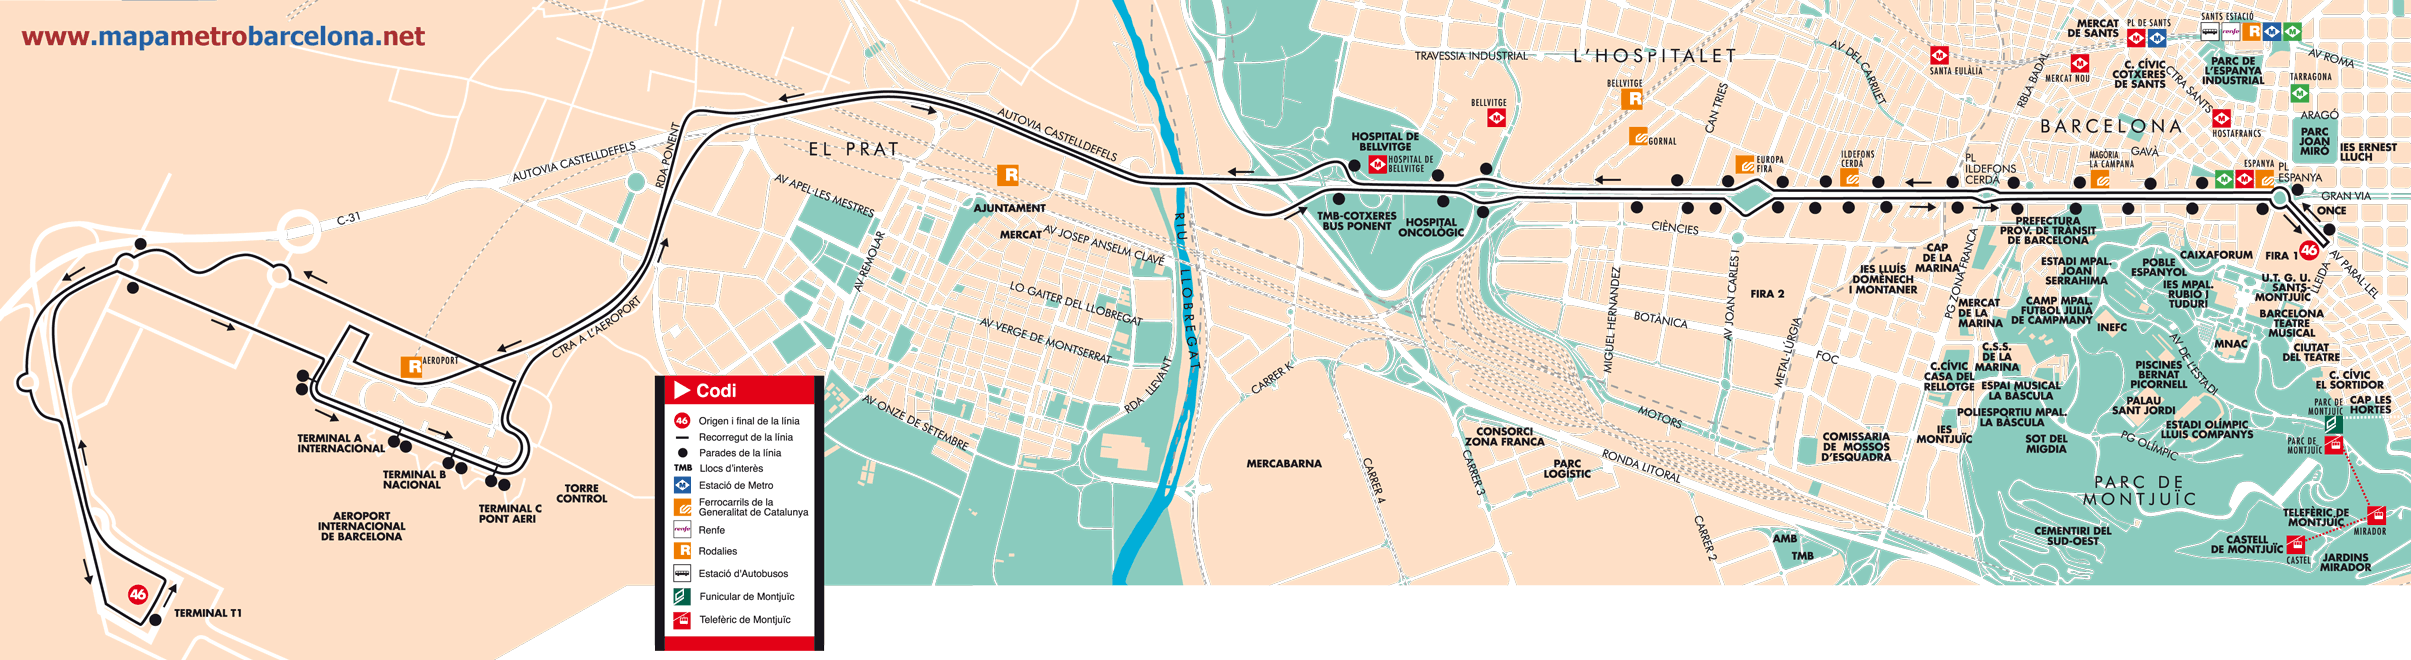 Barcelona bus map line 46